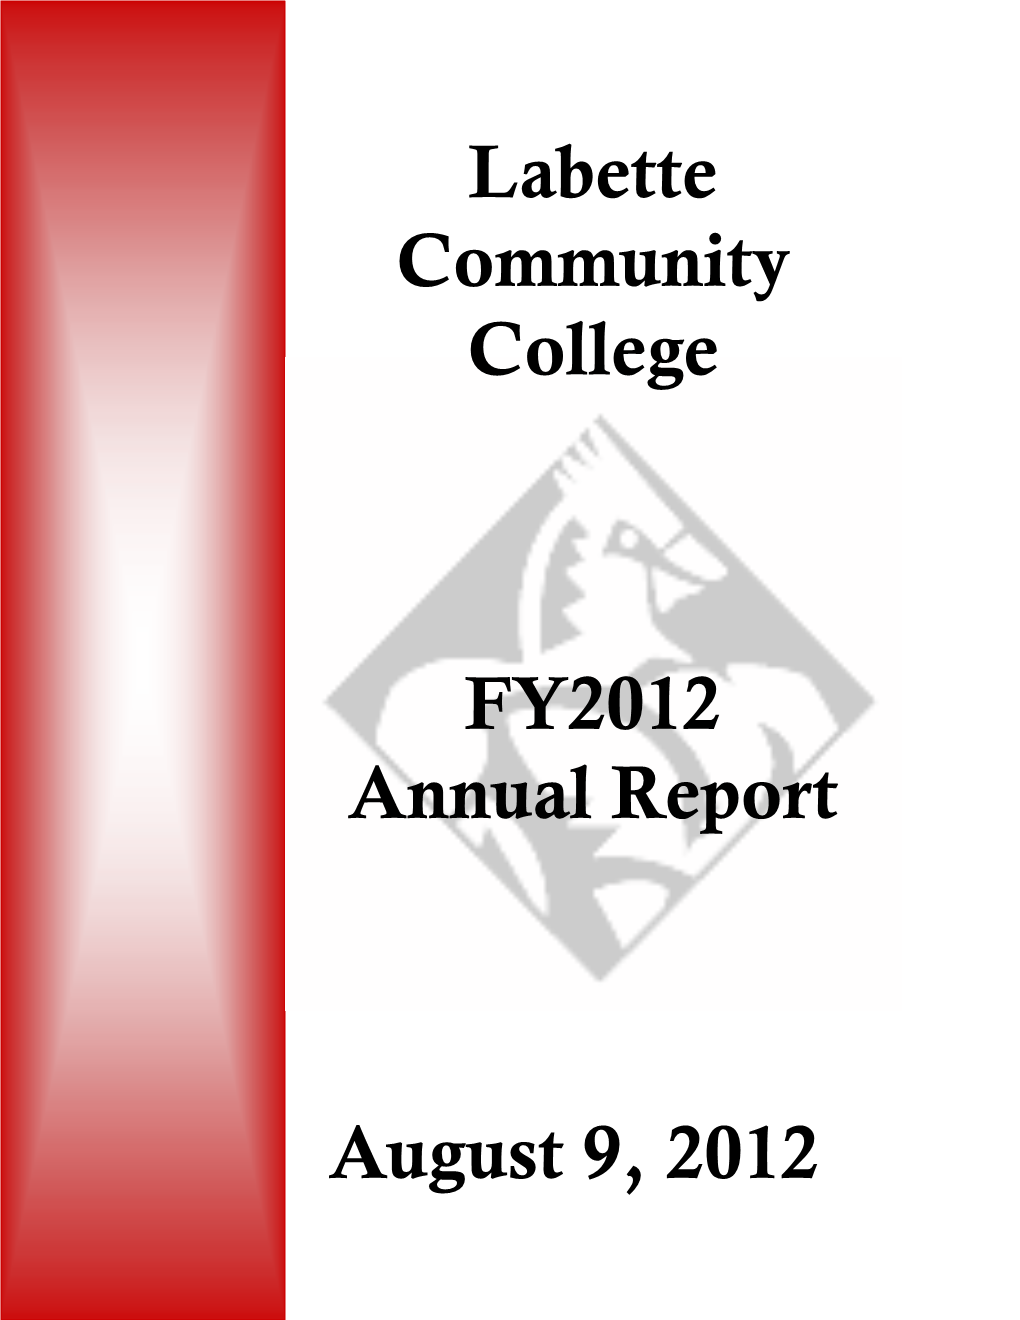 August 9, 2012 Labette Community College Annual Report FY2012